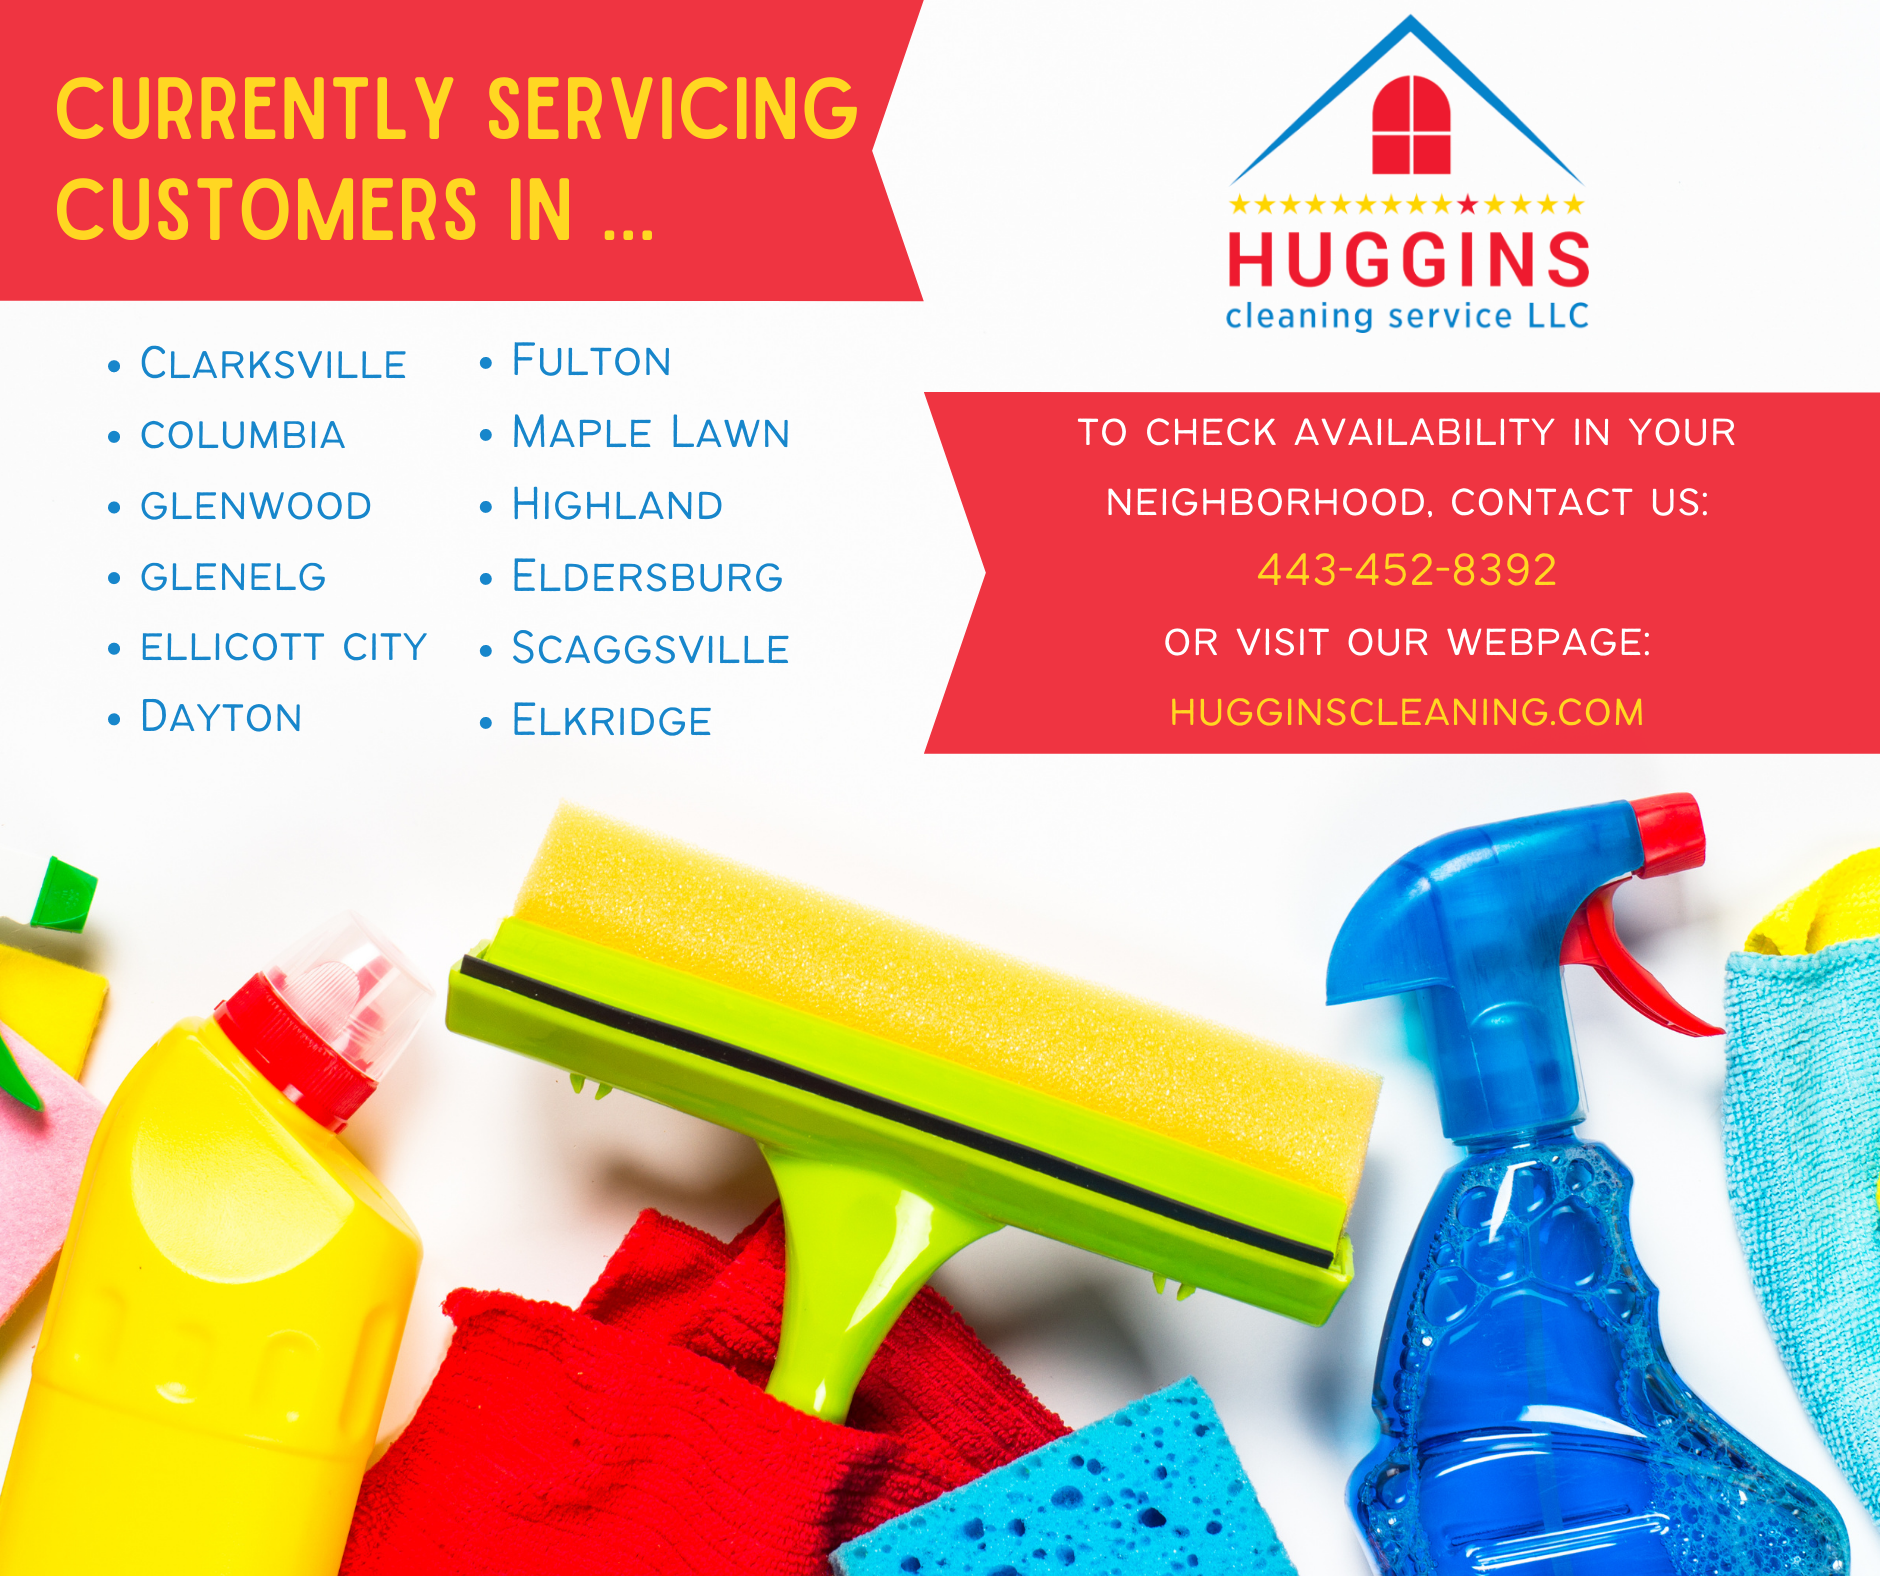 Huggins Cleaning Service LLC